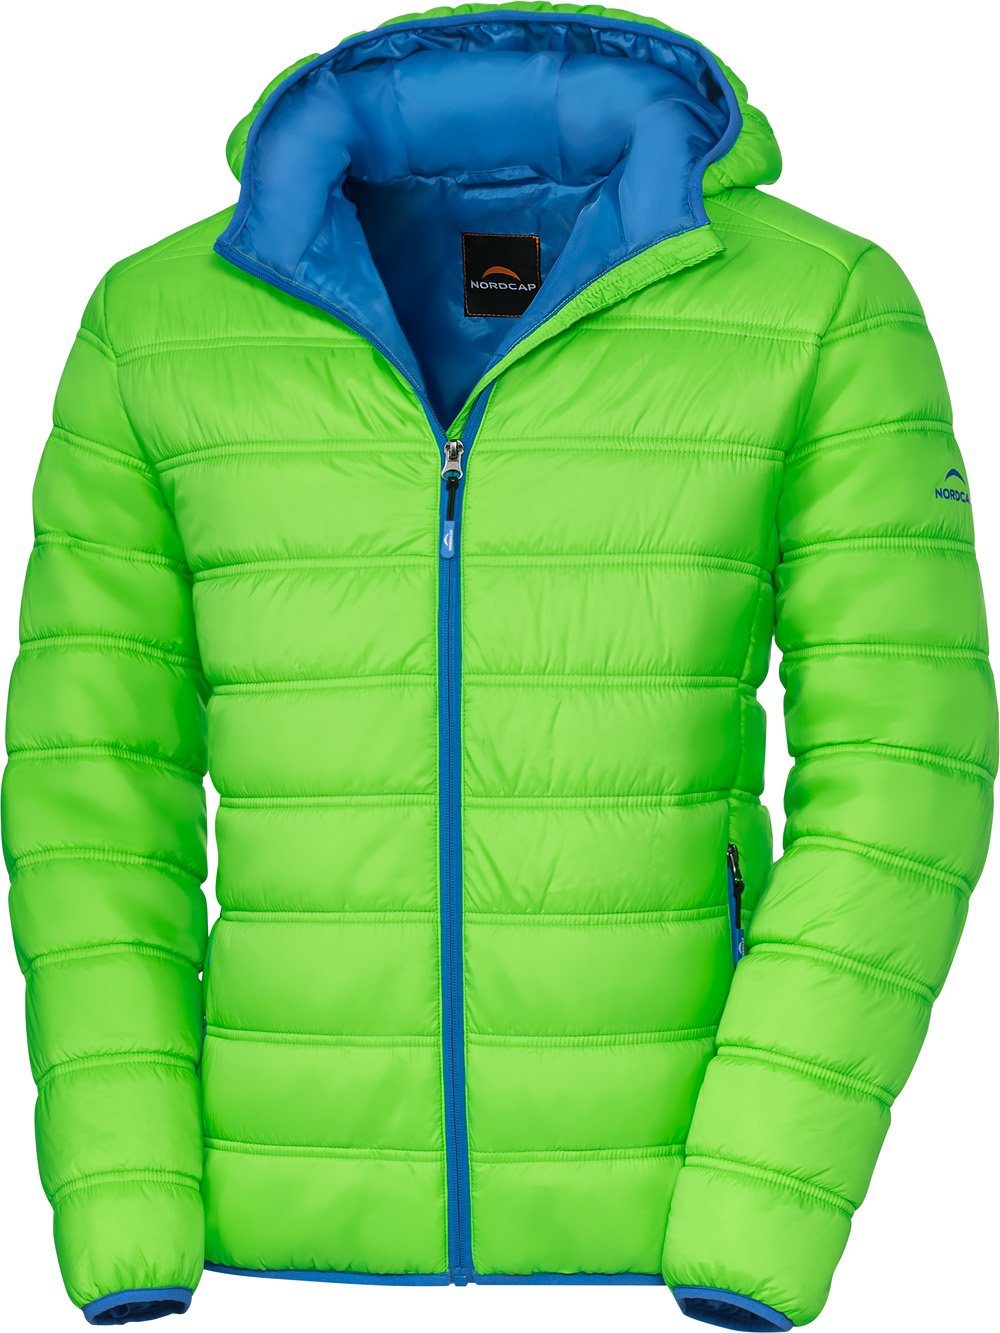 Nordcap Steppjacke ultraleichte Jacke mit Kapuze grün | Windbreakers